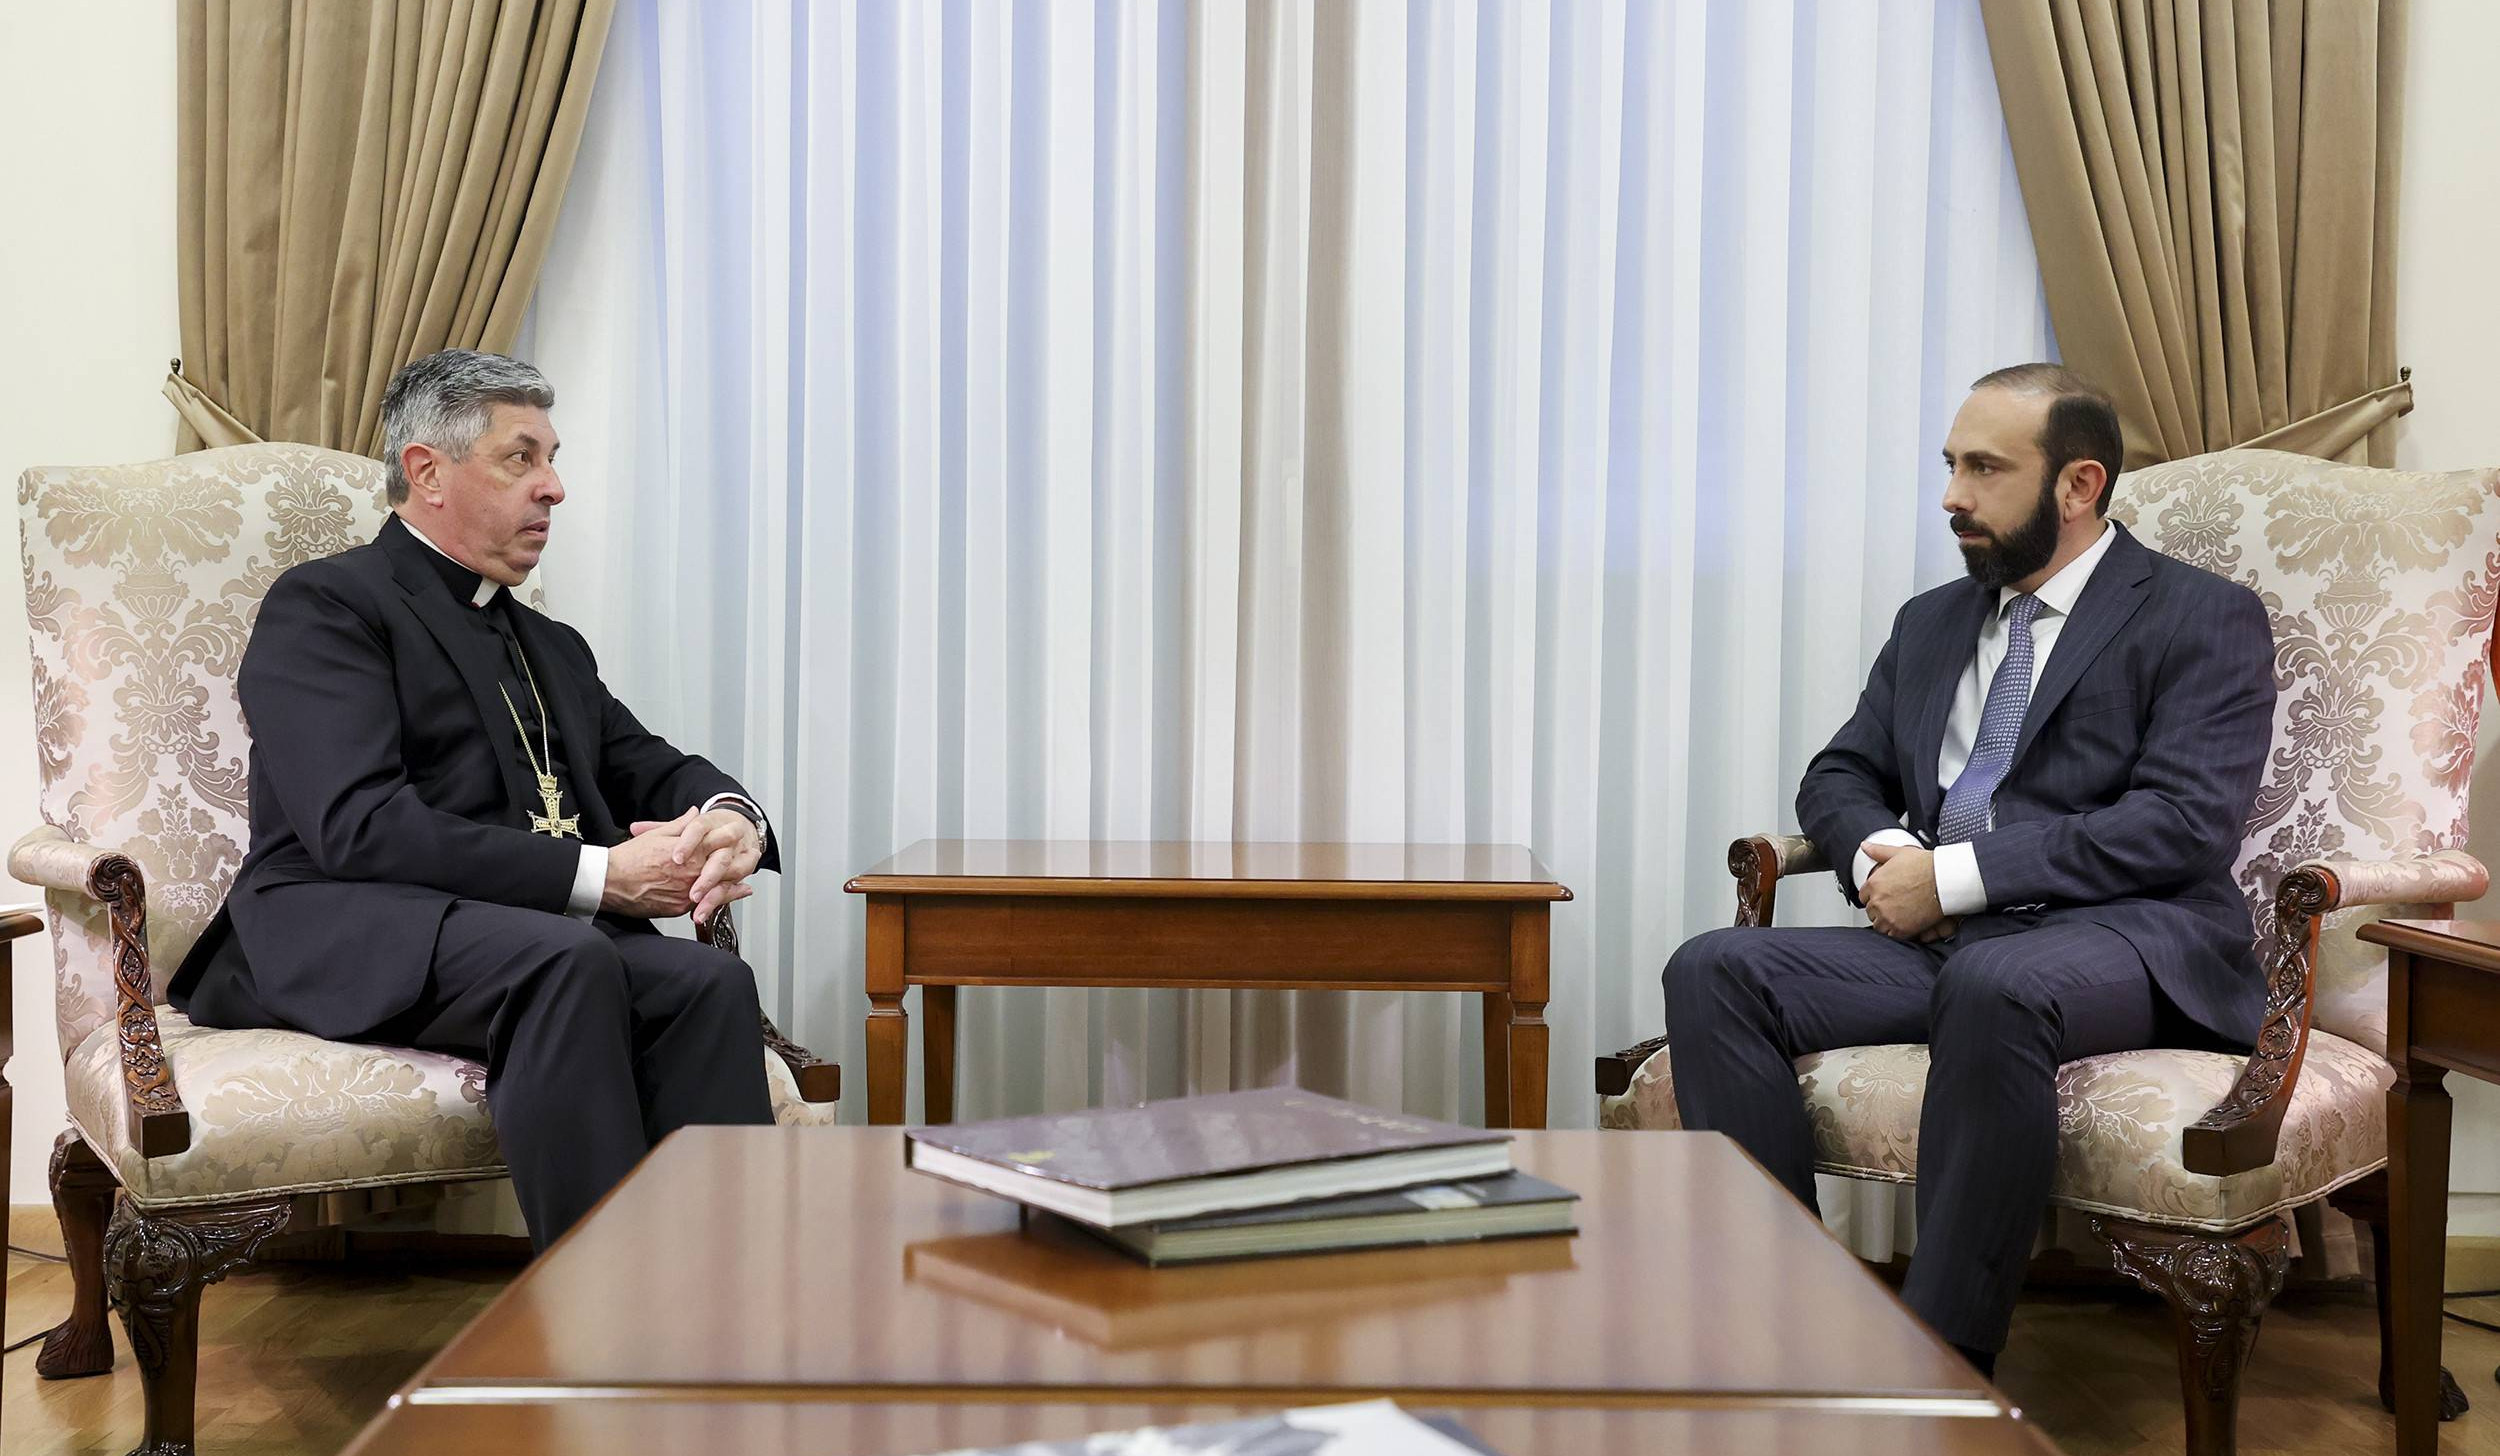 Video - Minister of Foreign Affairs Armenia Ararat Mirzoyan received the Apostolic Nuncio of the Holy See to Armenia